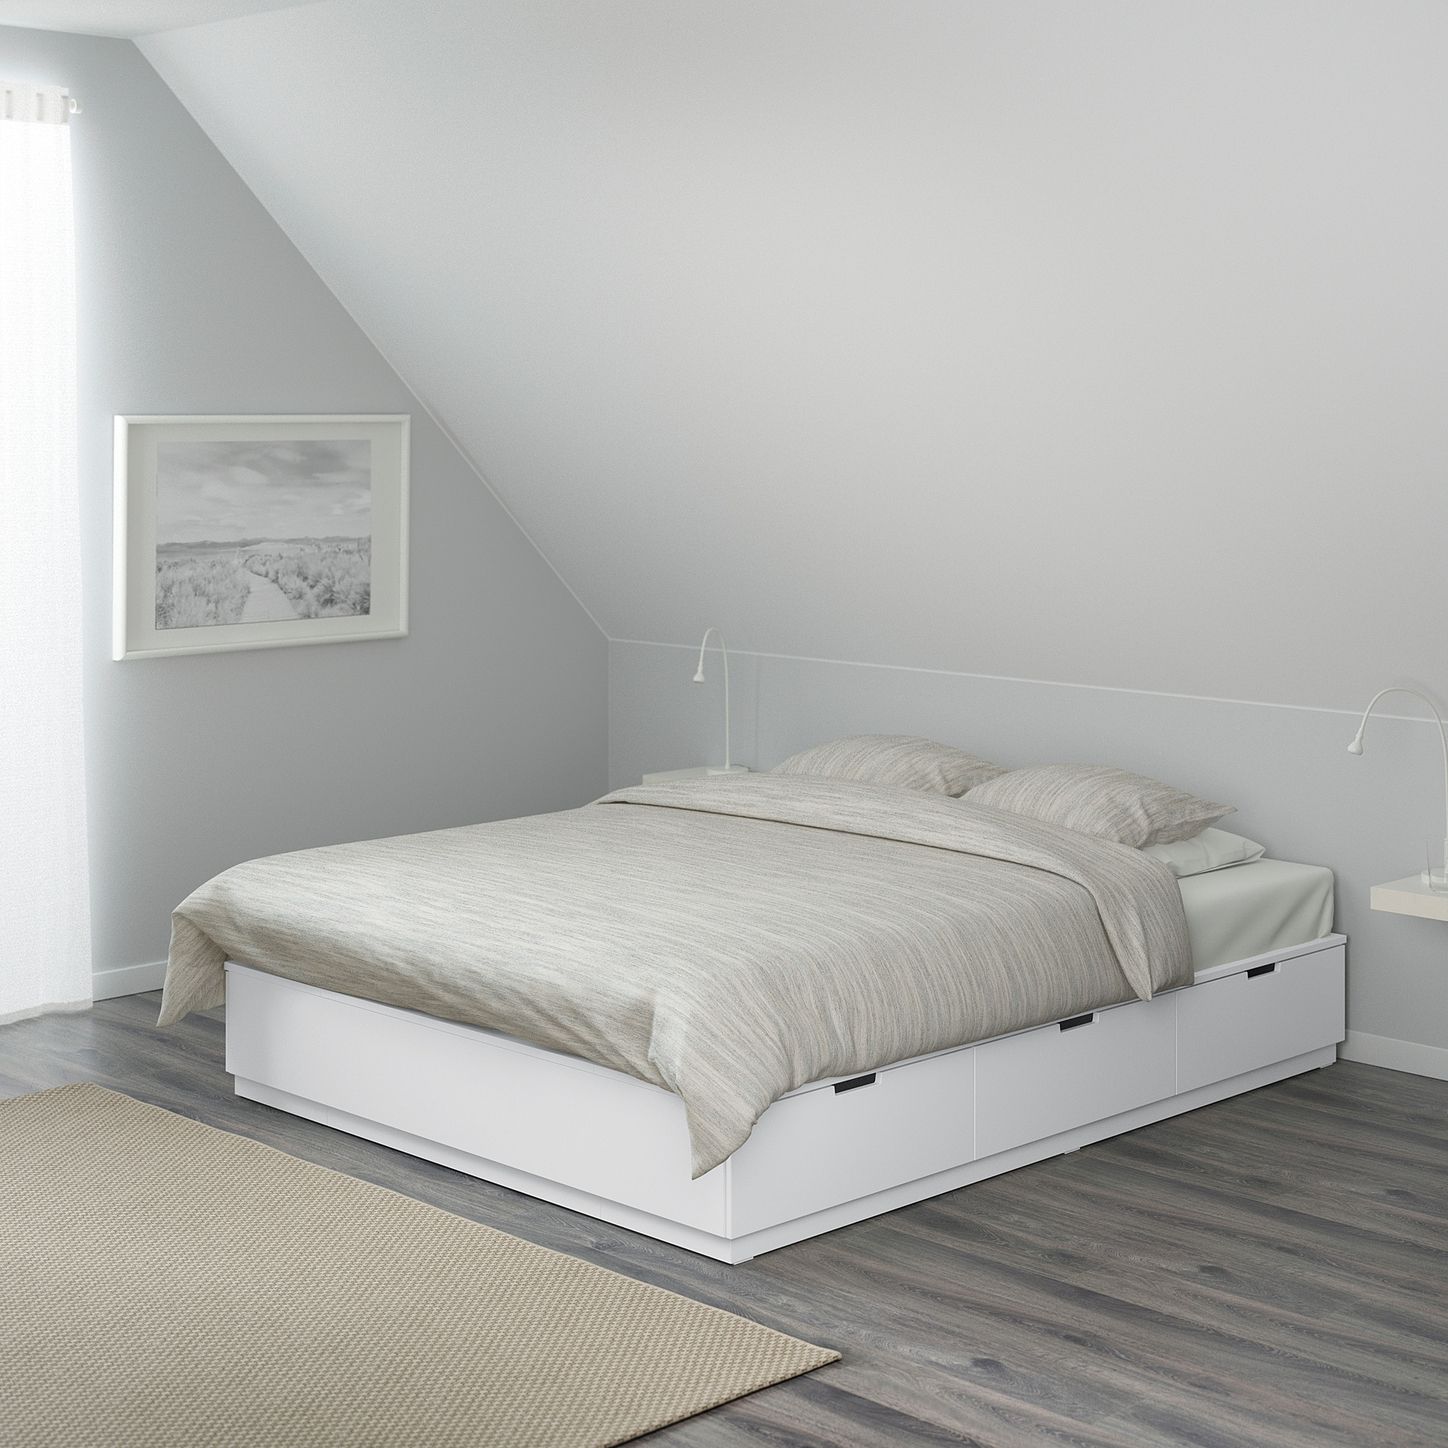 Modern Platform Beds With Storage, Bed Frame No Headboard Ikea